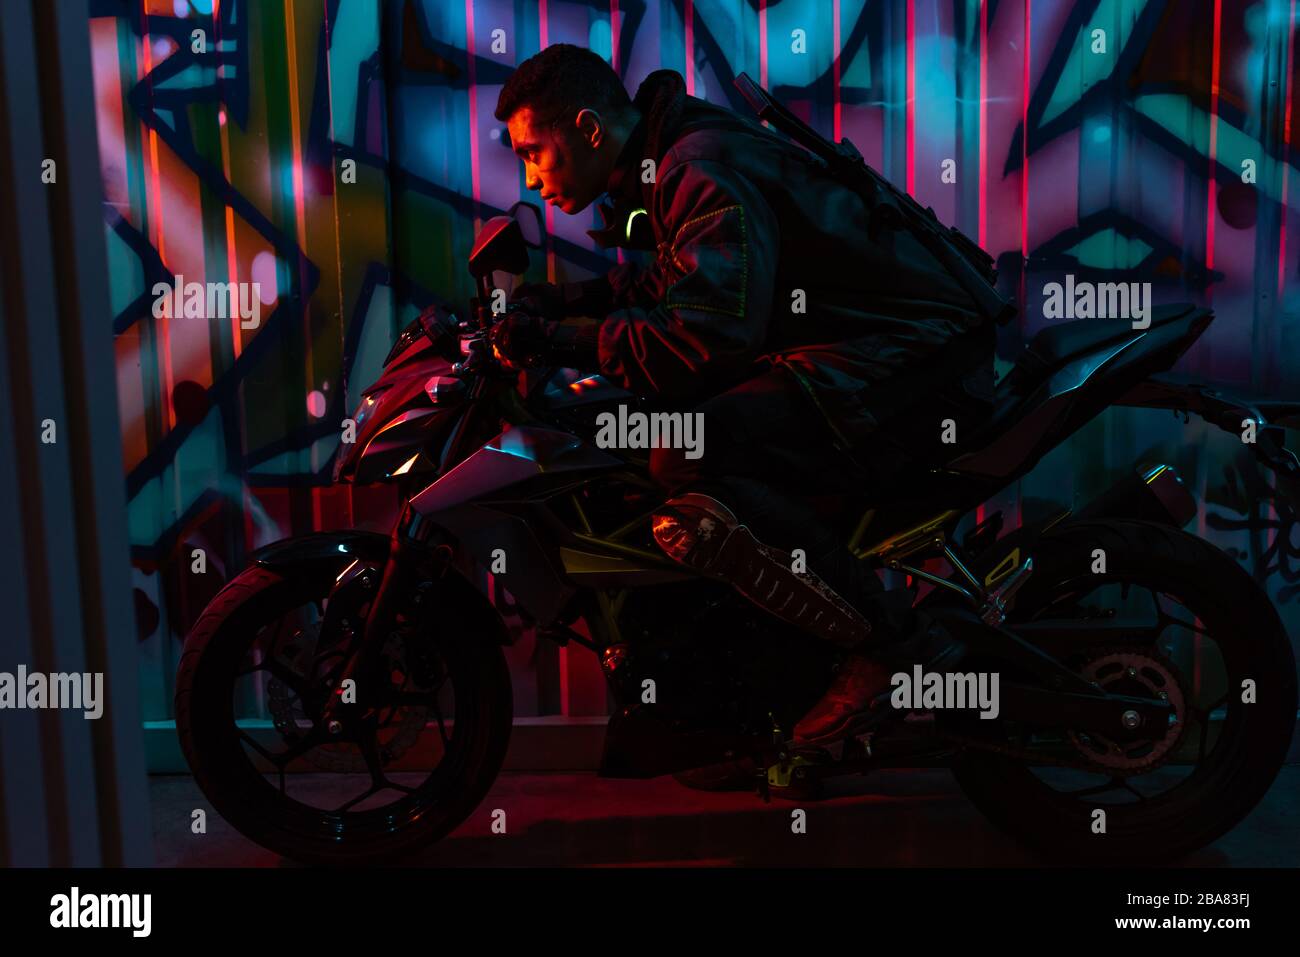 profile of mixed race cyberpunk player riding motorcycle on street with graffiti Stock Photo